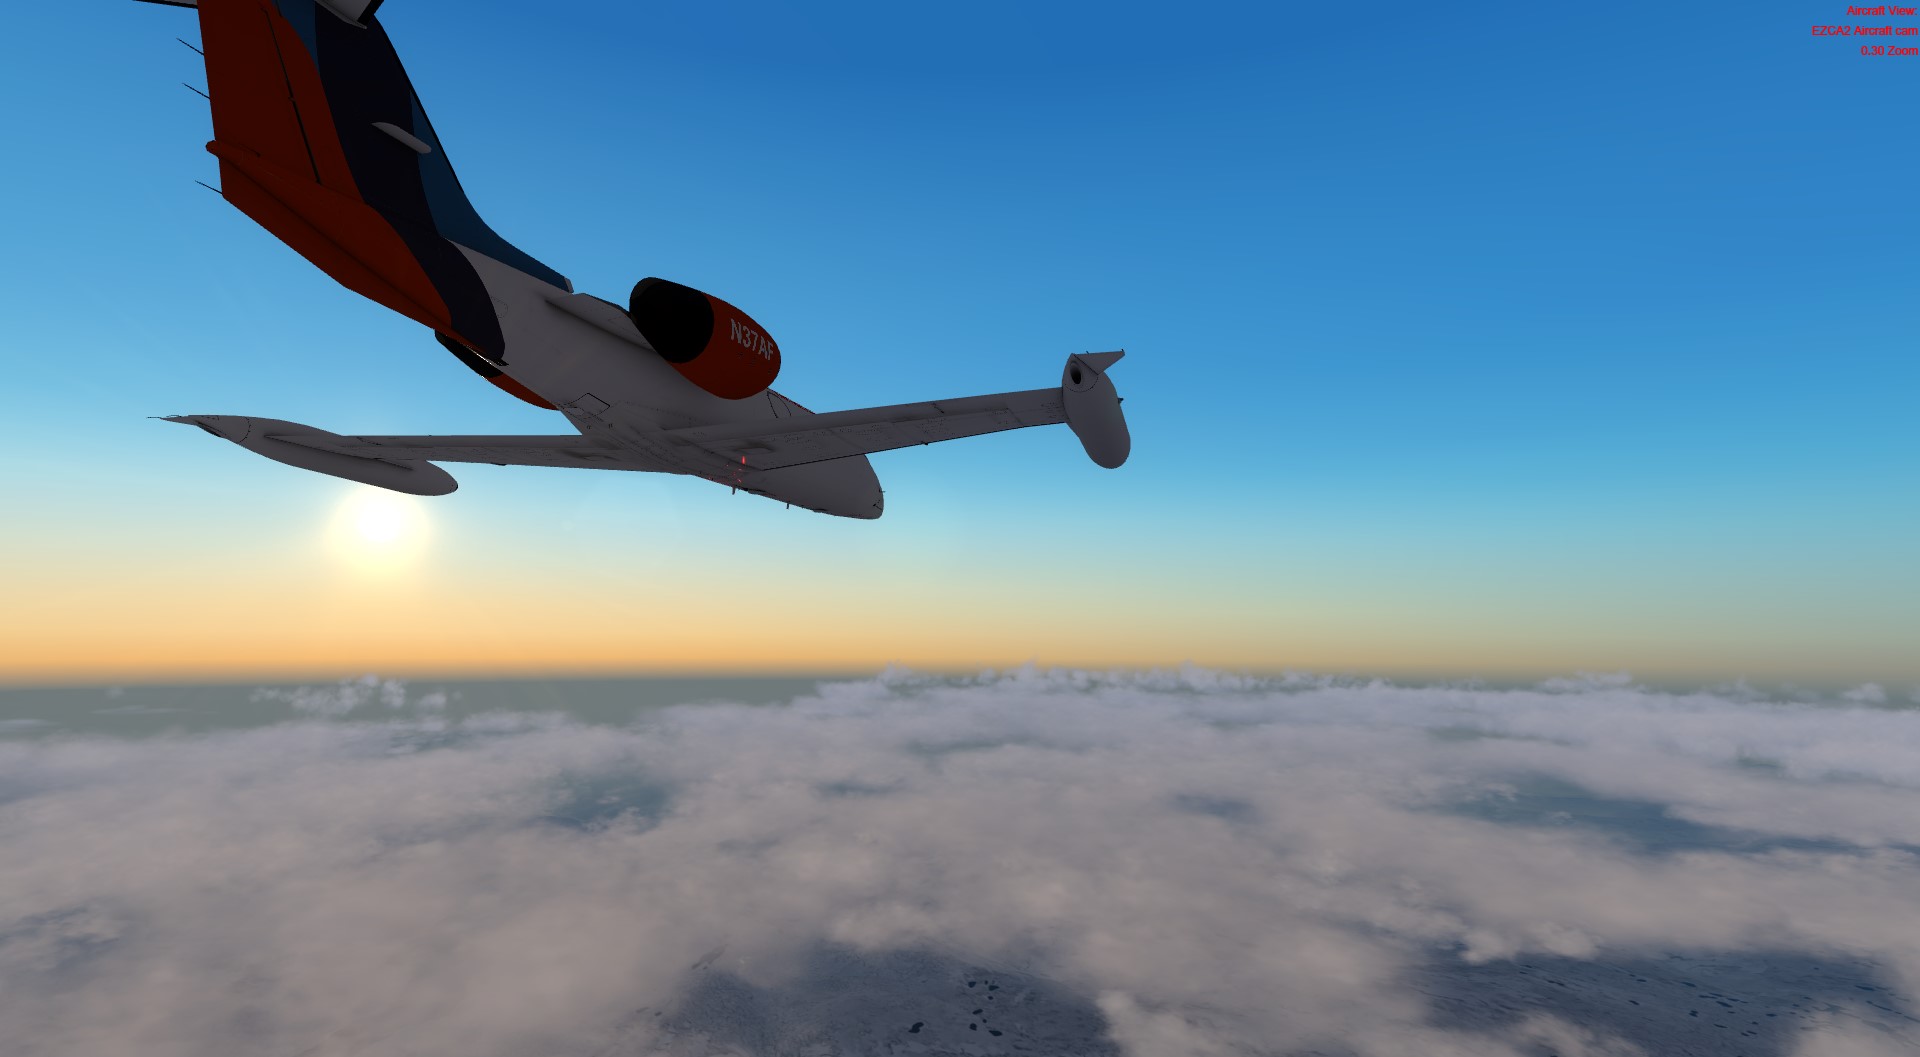 Flysimware – Learjet 35A 评测与冰岛送货之旅-4294 